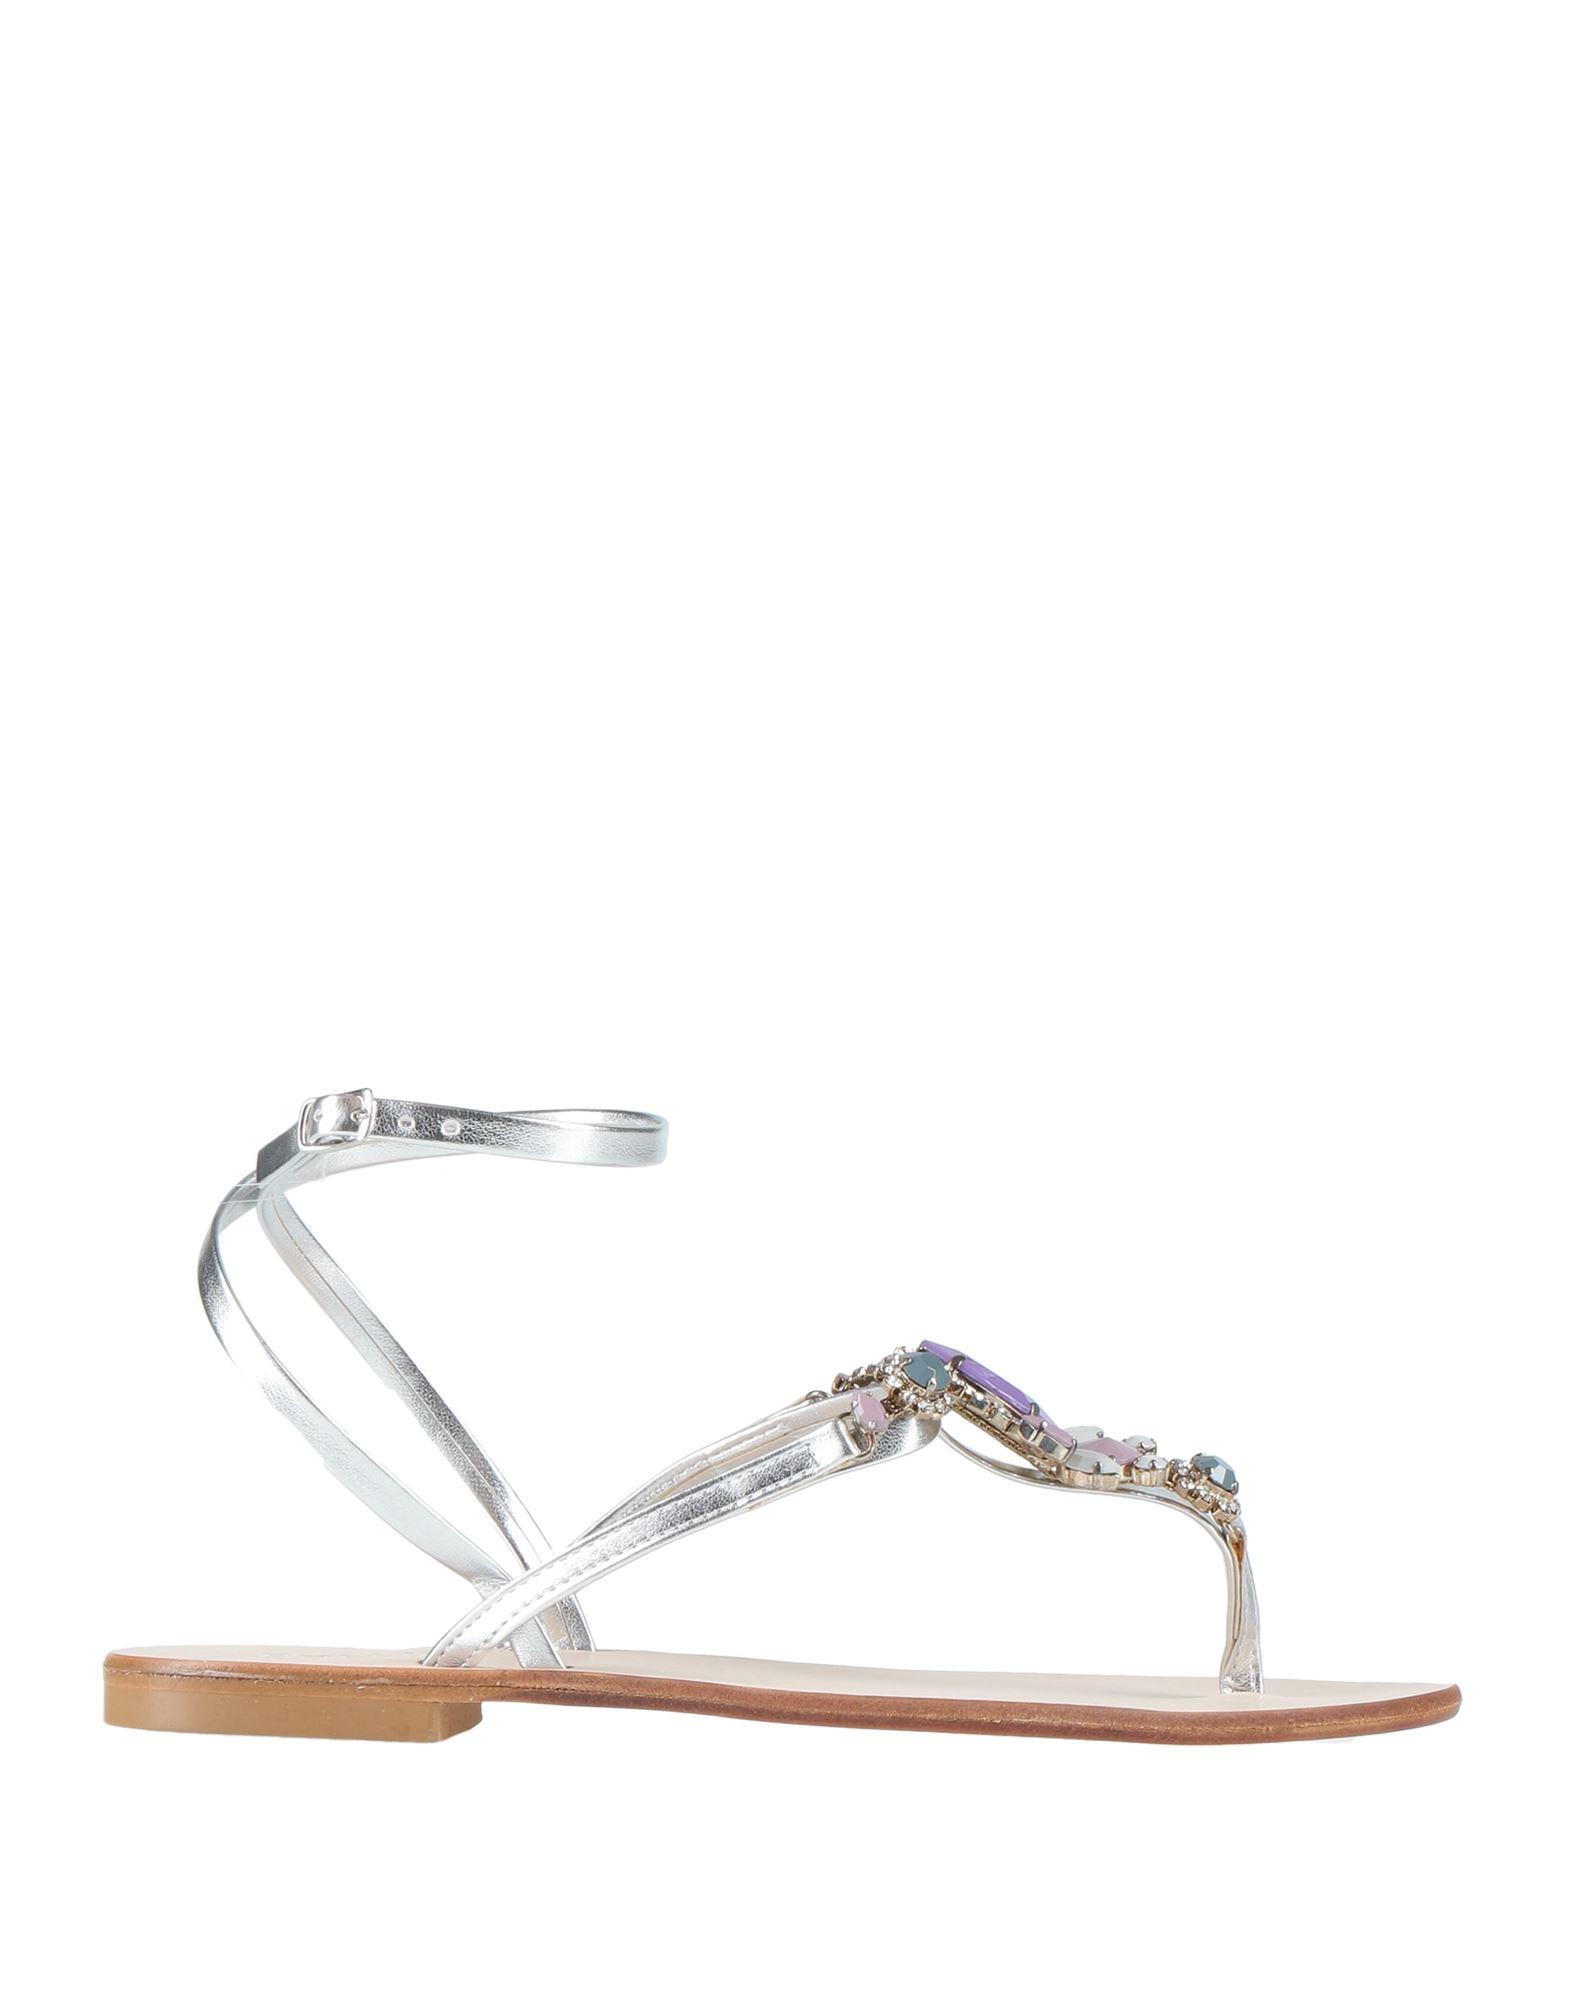 Pollini Toe Post Sandals in White | Lyst